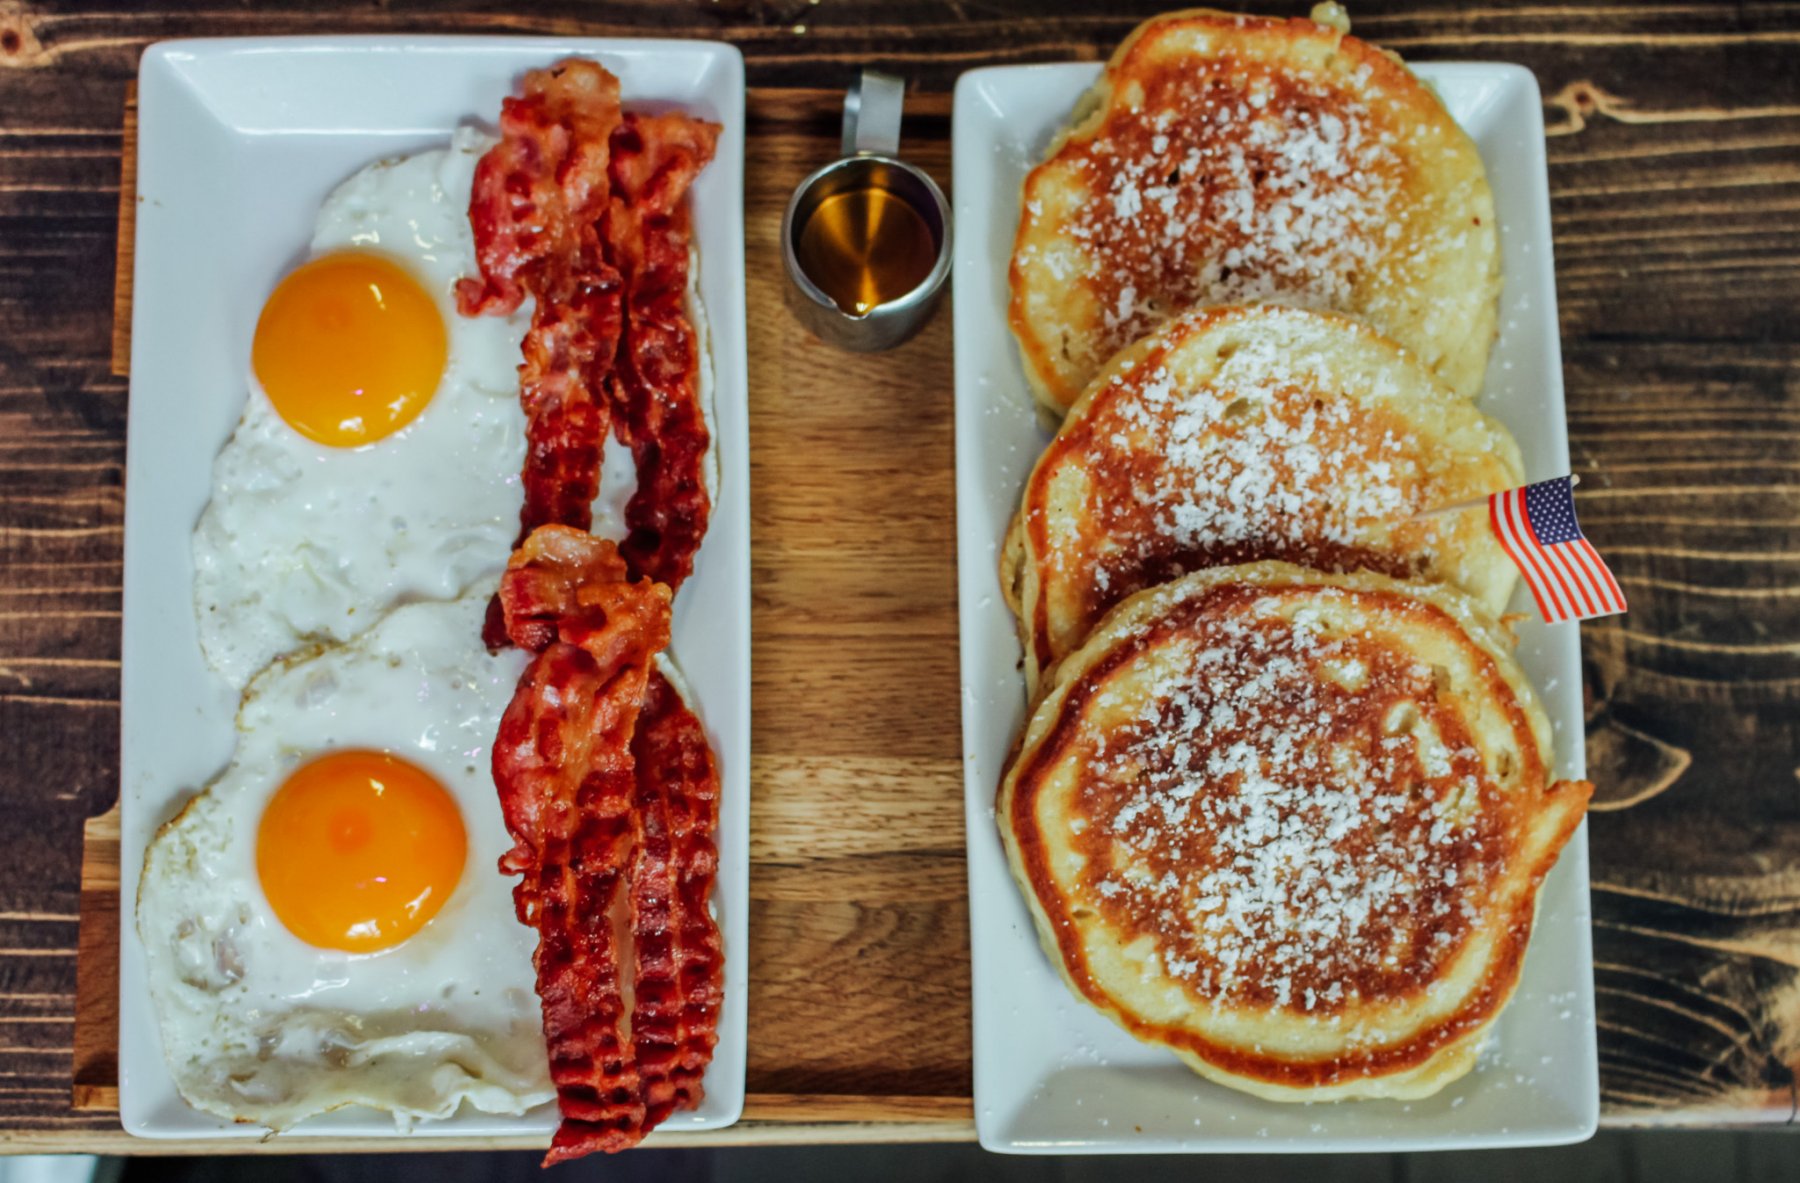 Geheimtipp Muenchen Pancake Am Tor Restaurant62 – ©Wunderland media gmbh